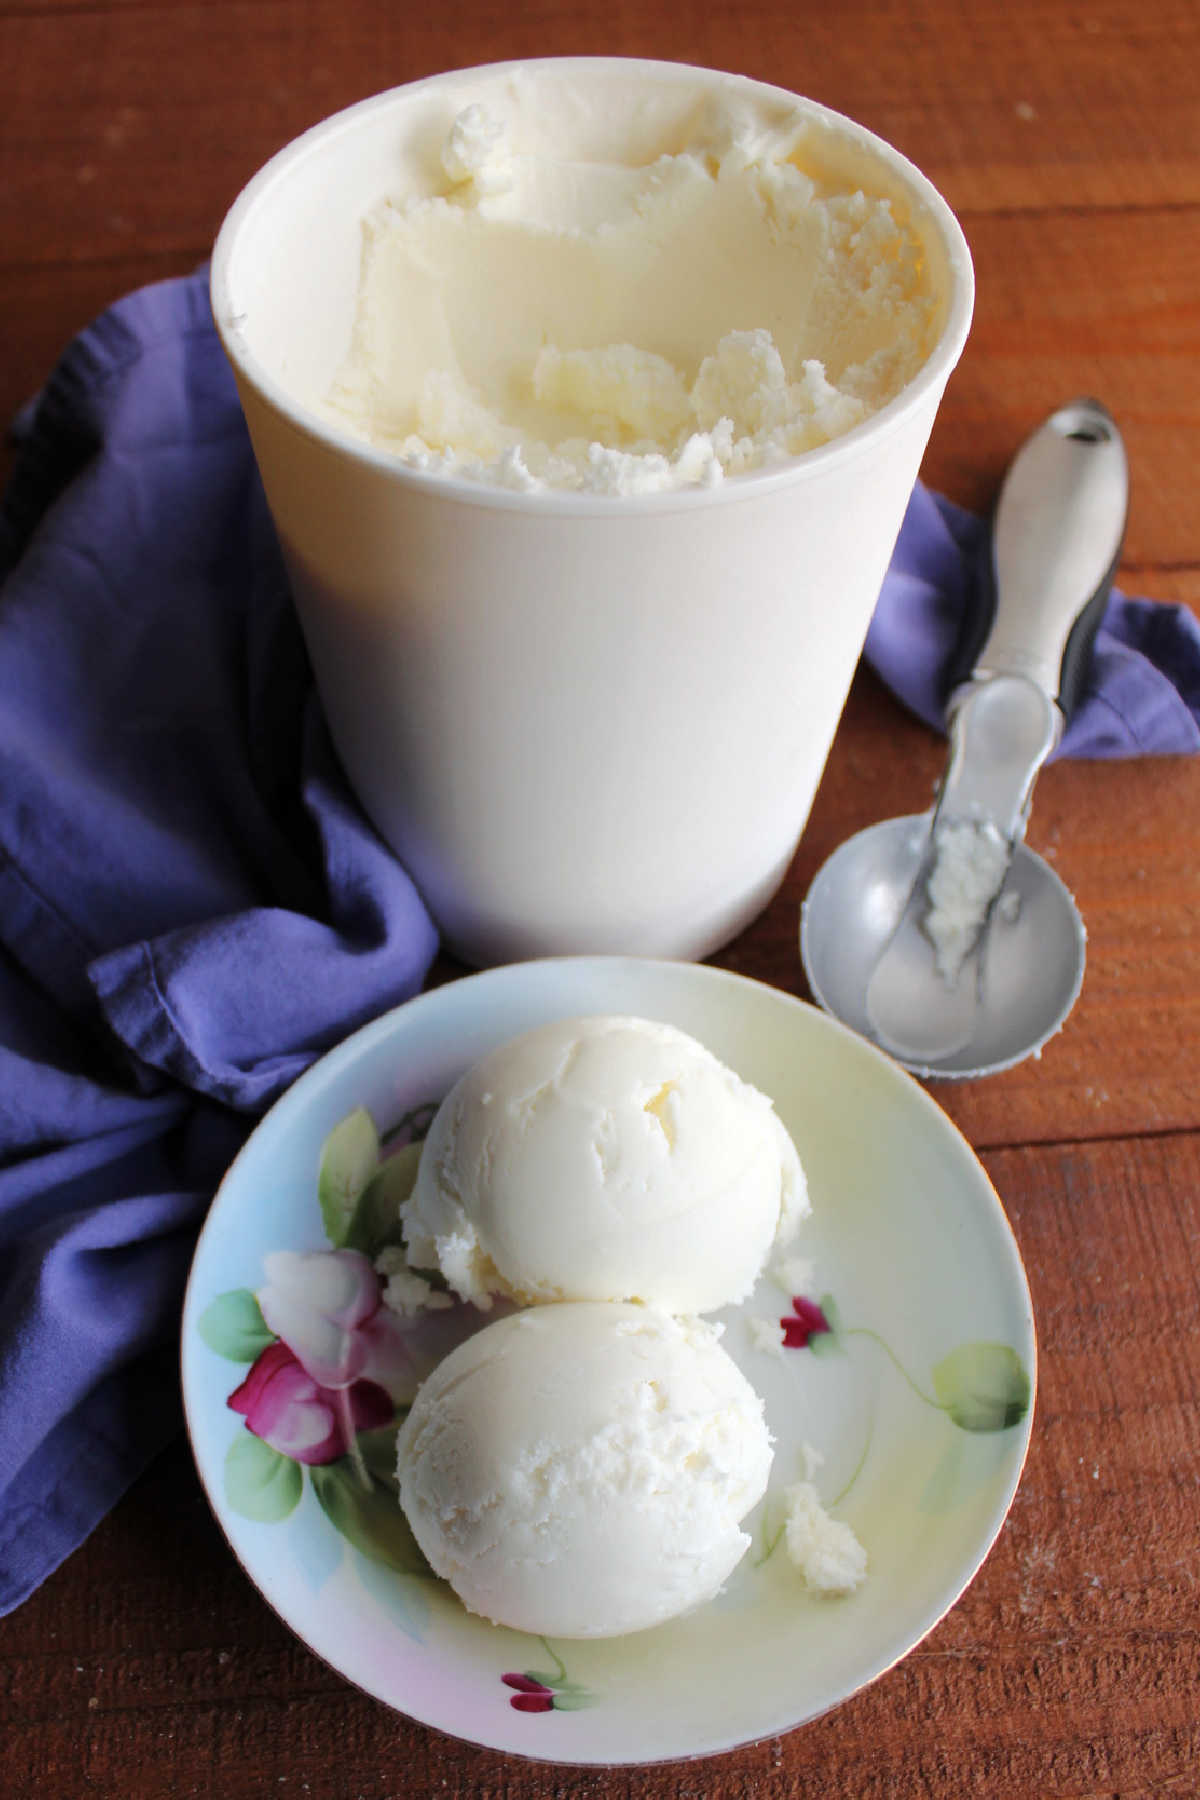 Two scoops of vanilla frozen yogurt, ready to be enjoyed.